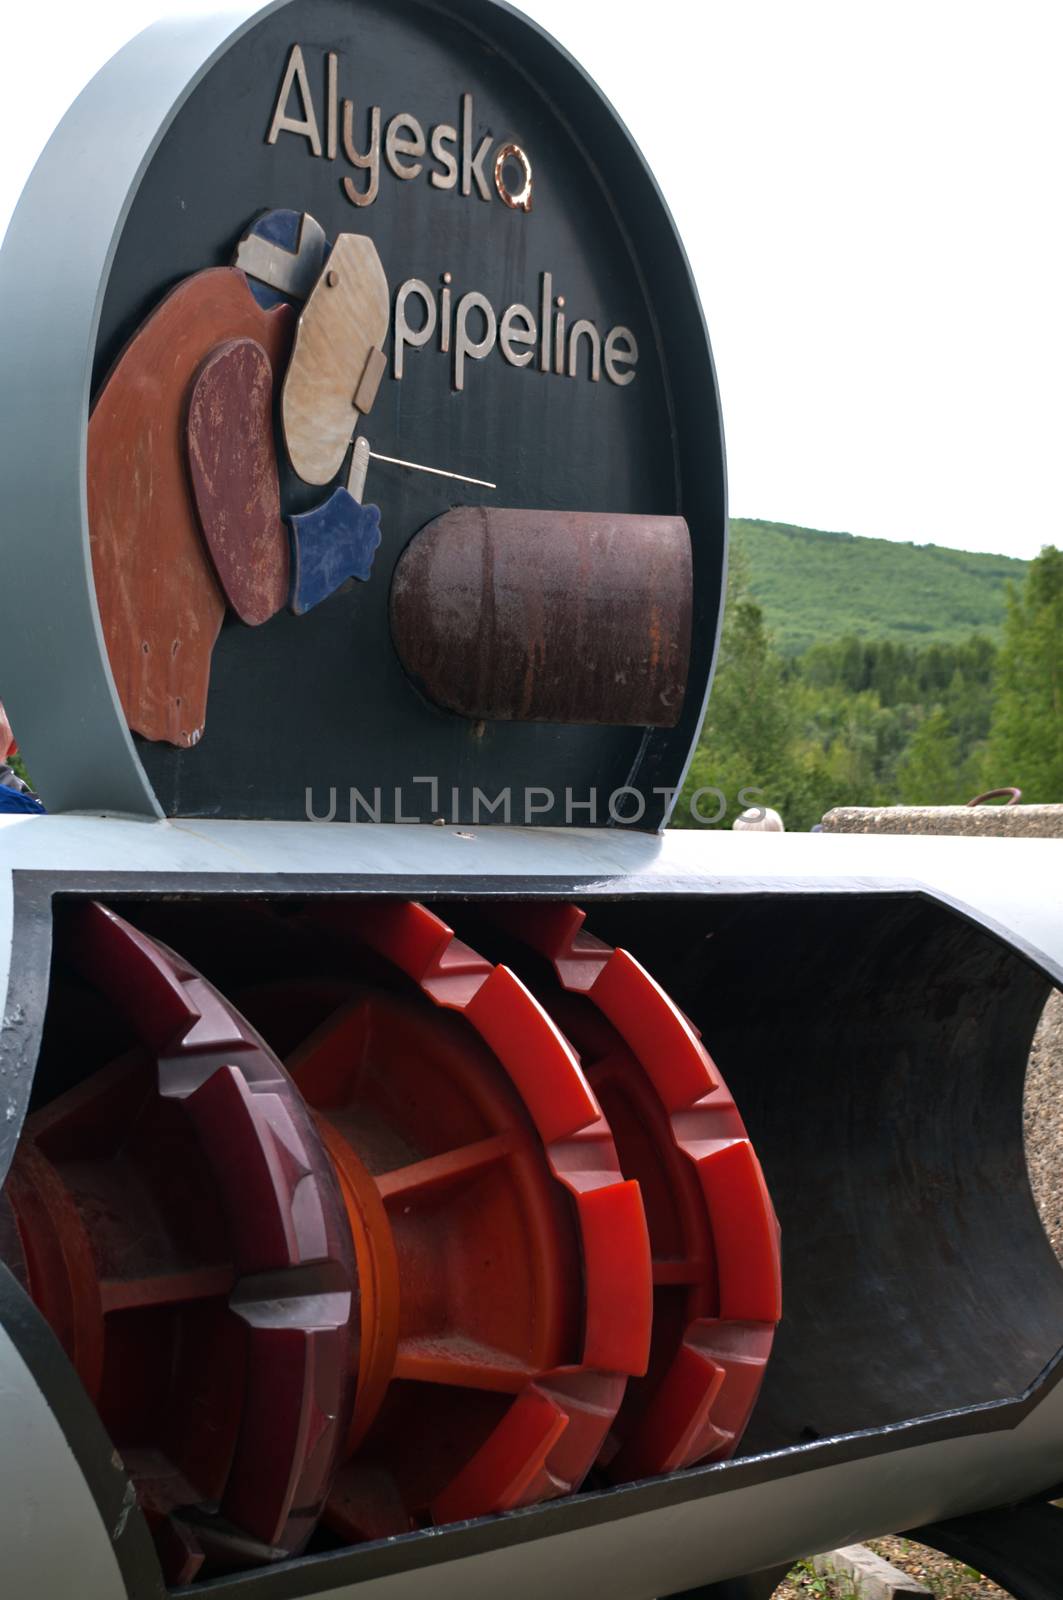 Alyeska Pipeline cleaner by edcorey